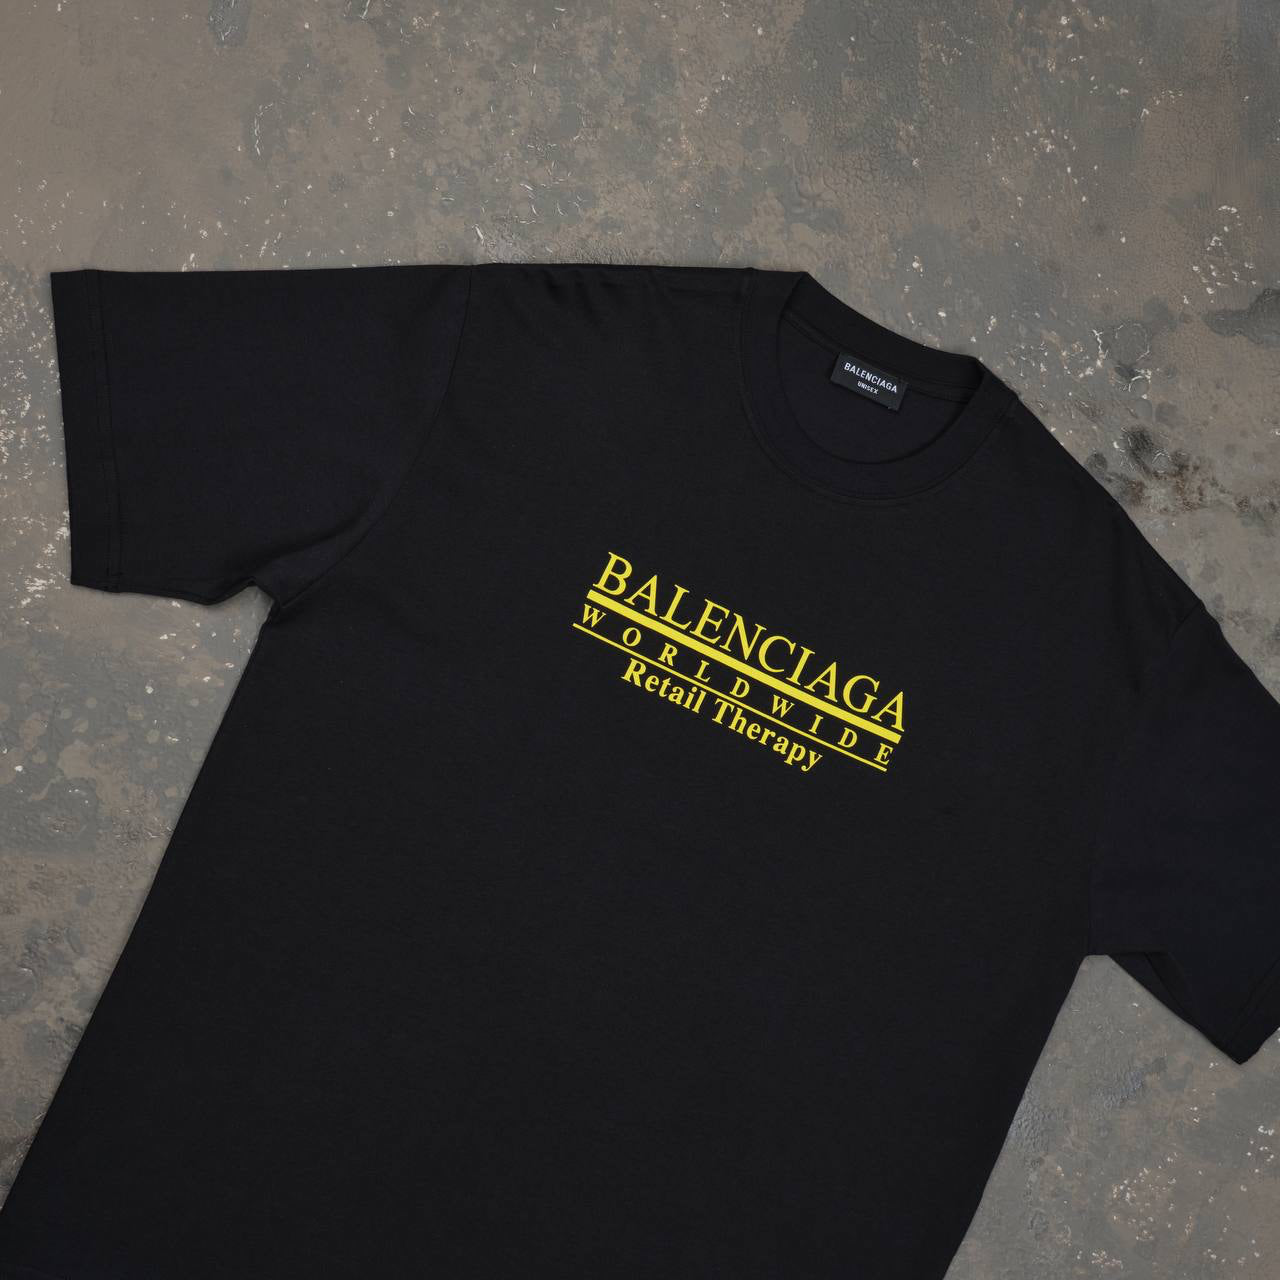 Balenciaga Retail Therapy logo print T shirt Black – GangsStoryStore